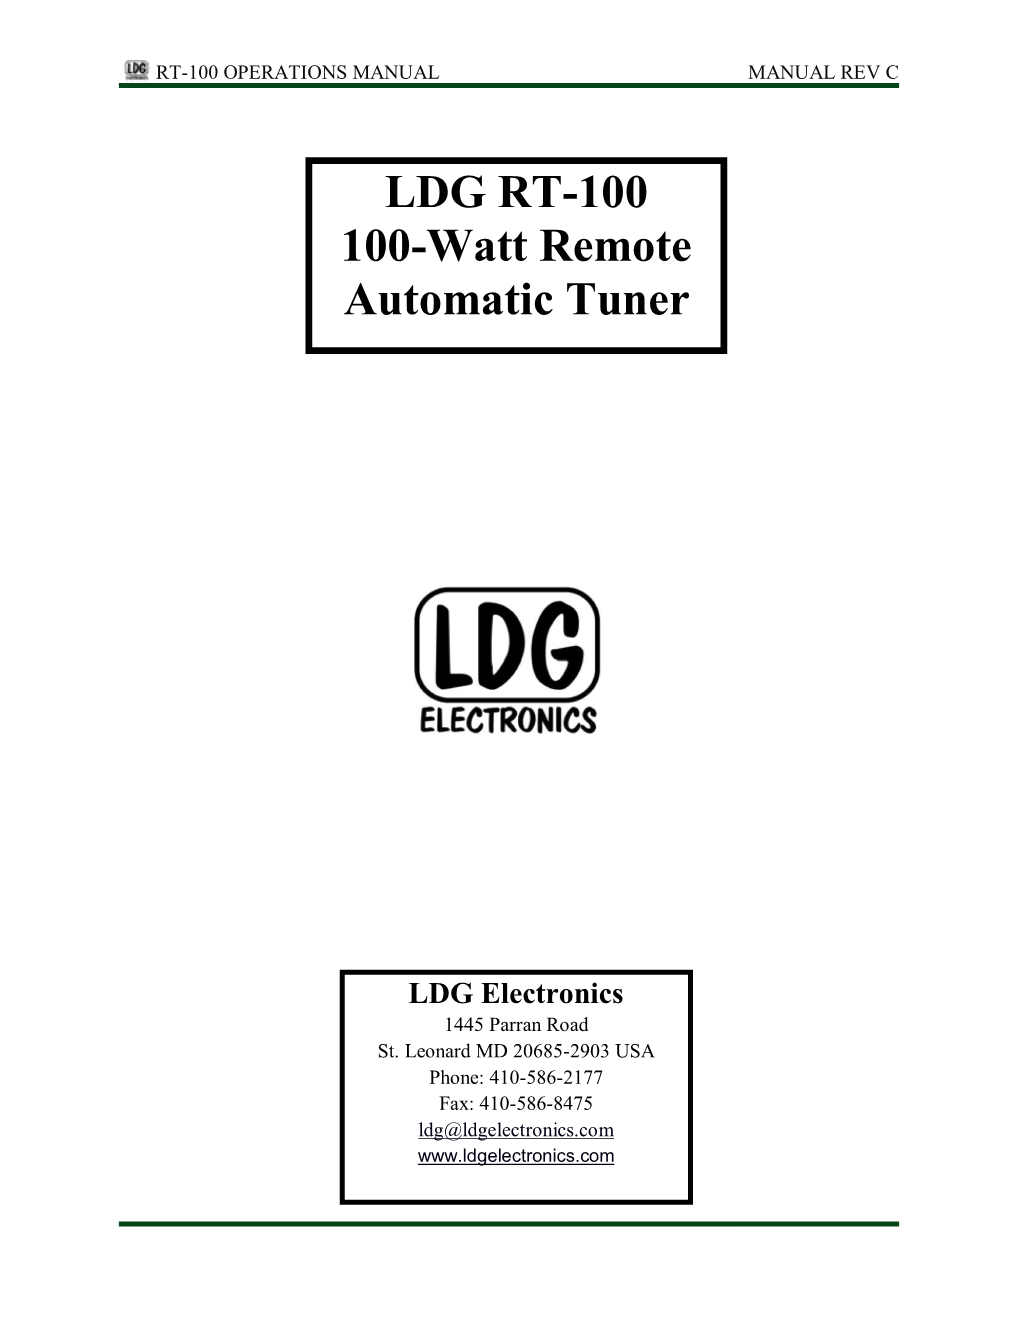 LDG RT-100 100-Watt Remote Automatic Tuner